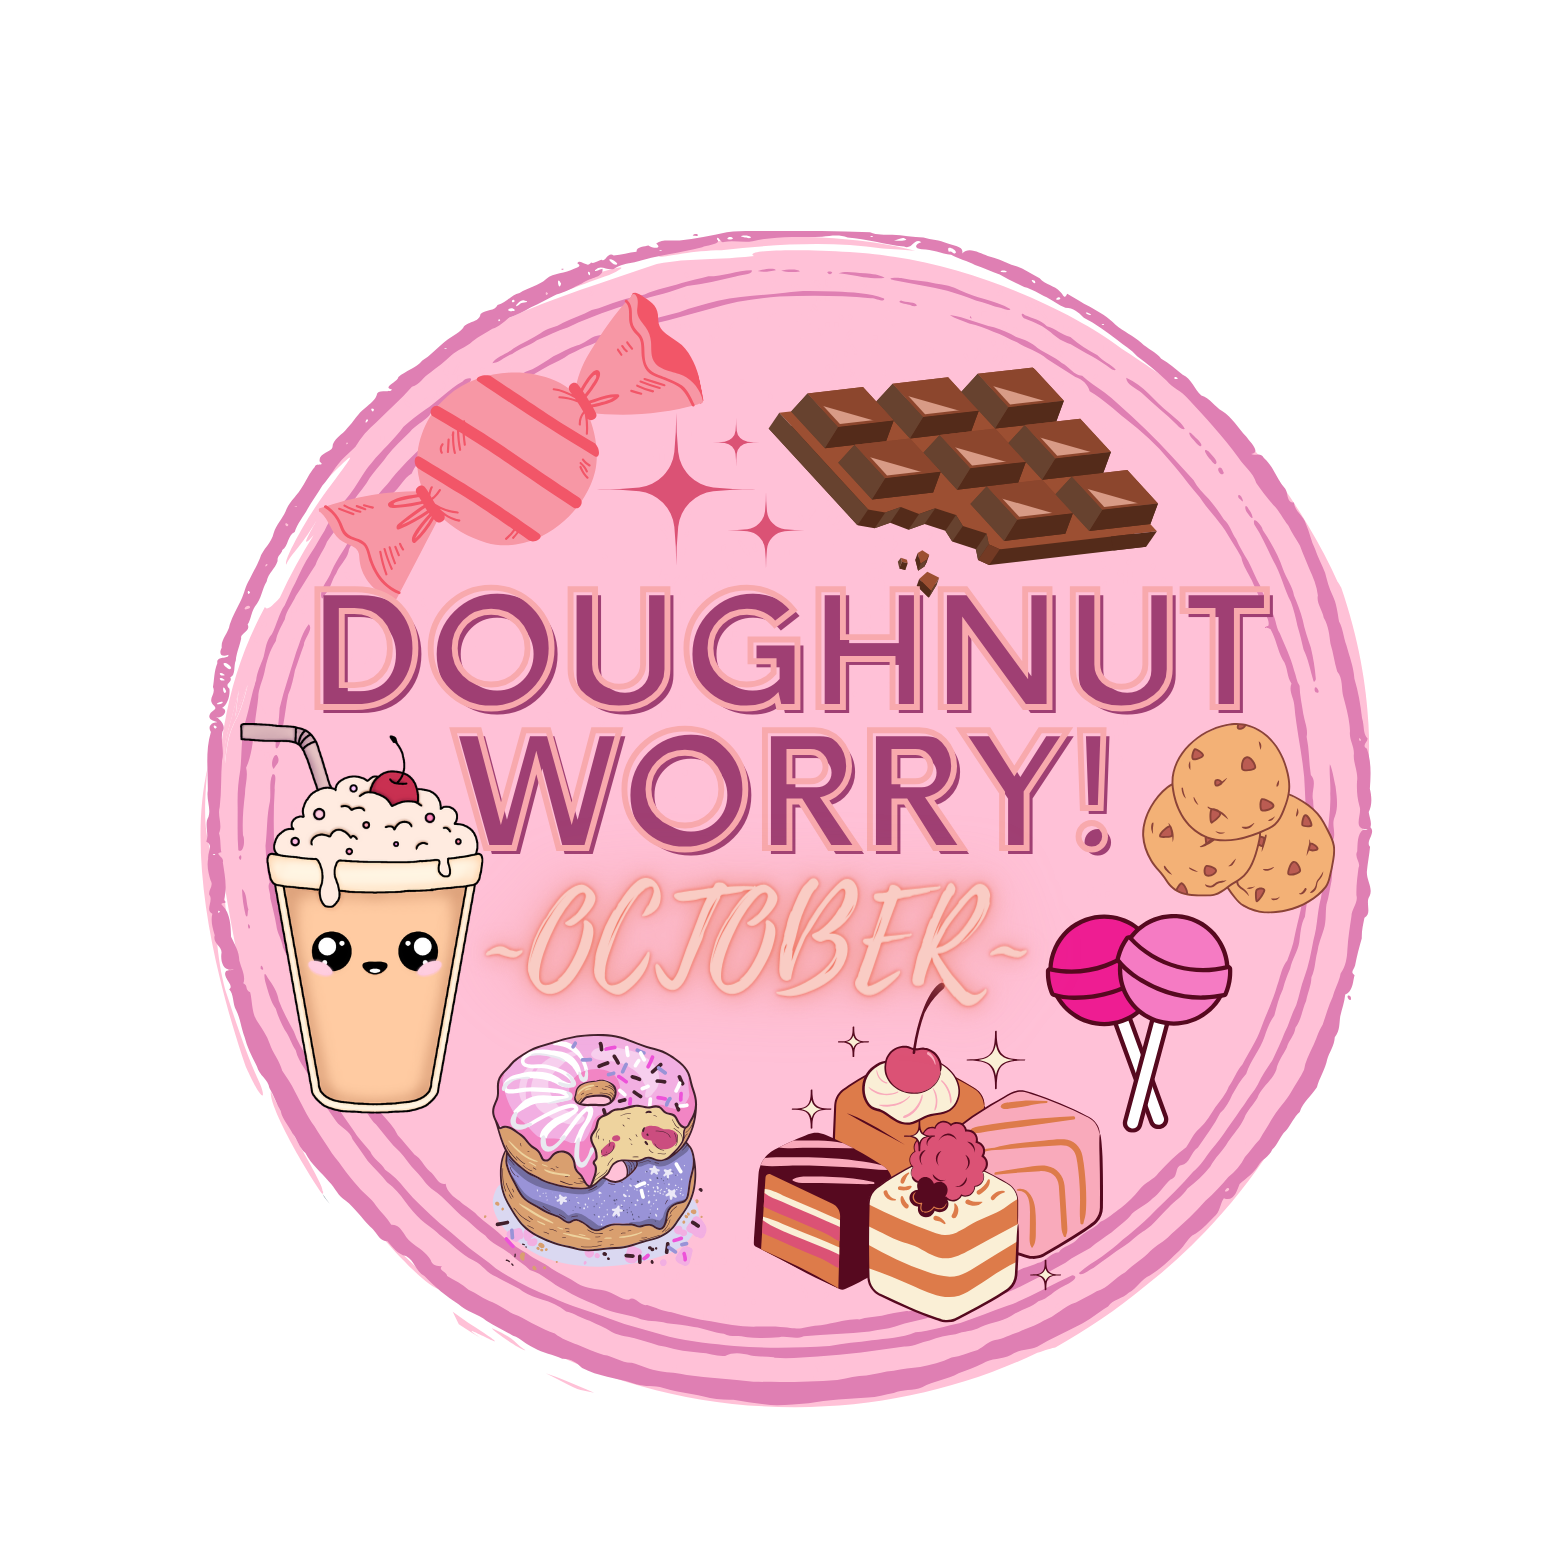 Doughnut worry in October! 